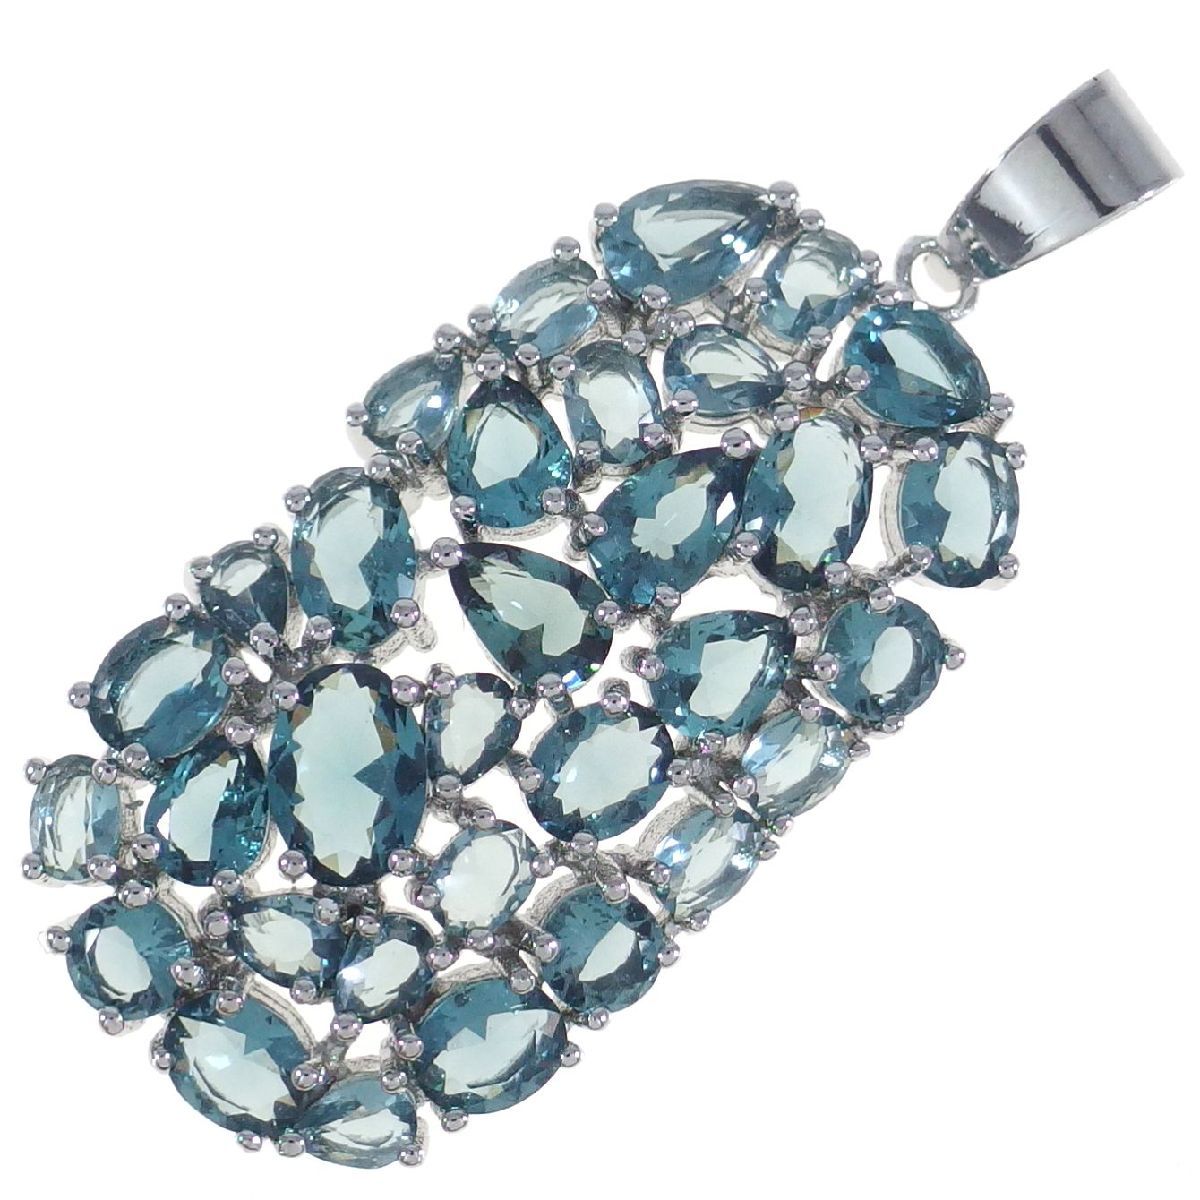 A8715*[925]* blue group topaz color Stone * blue color silver Phil do* new goods pendant * necklace .*